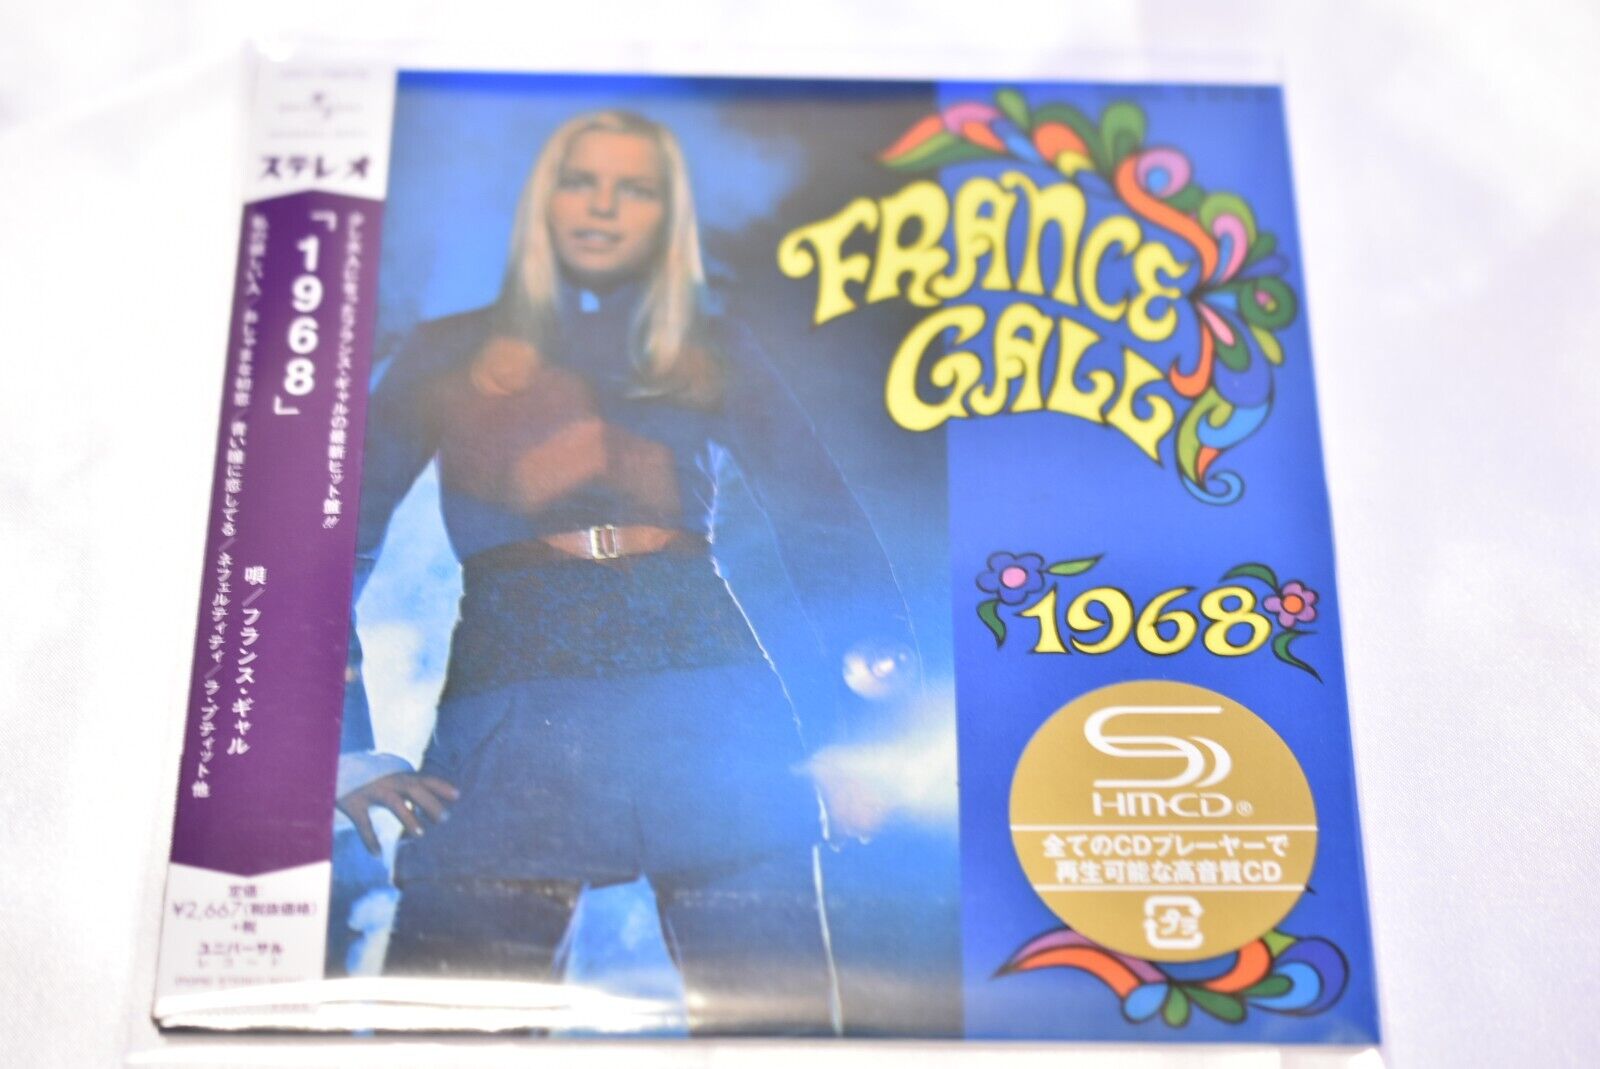 FRANCE GALL-1968-JAPAN Paper Sleeve SHM-CD Ltd/Ed +Tracking number